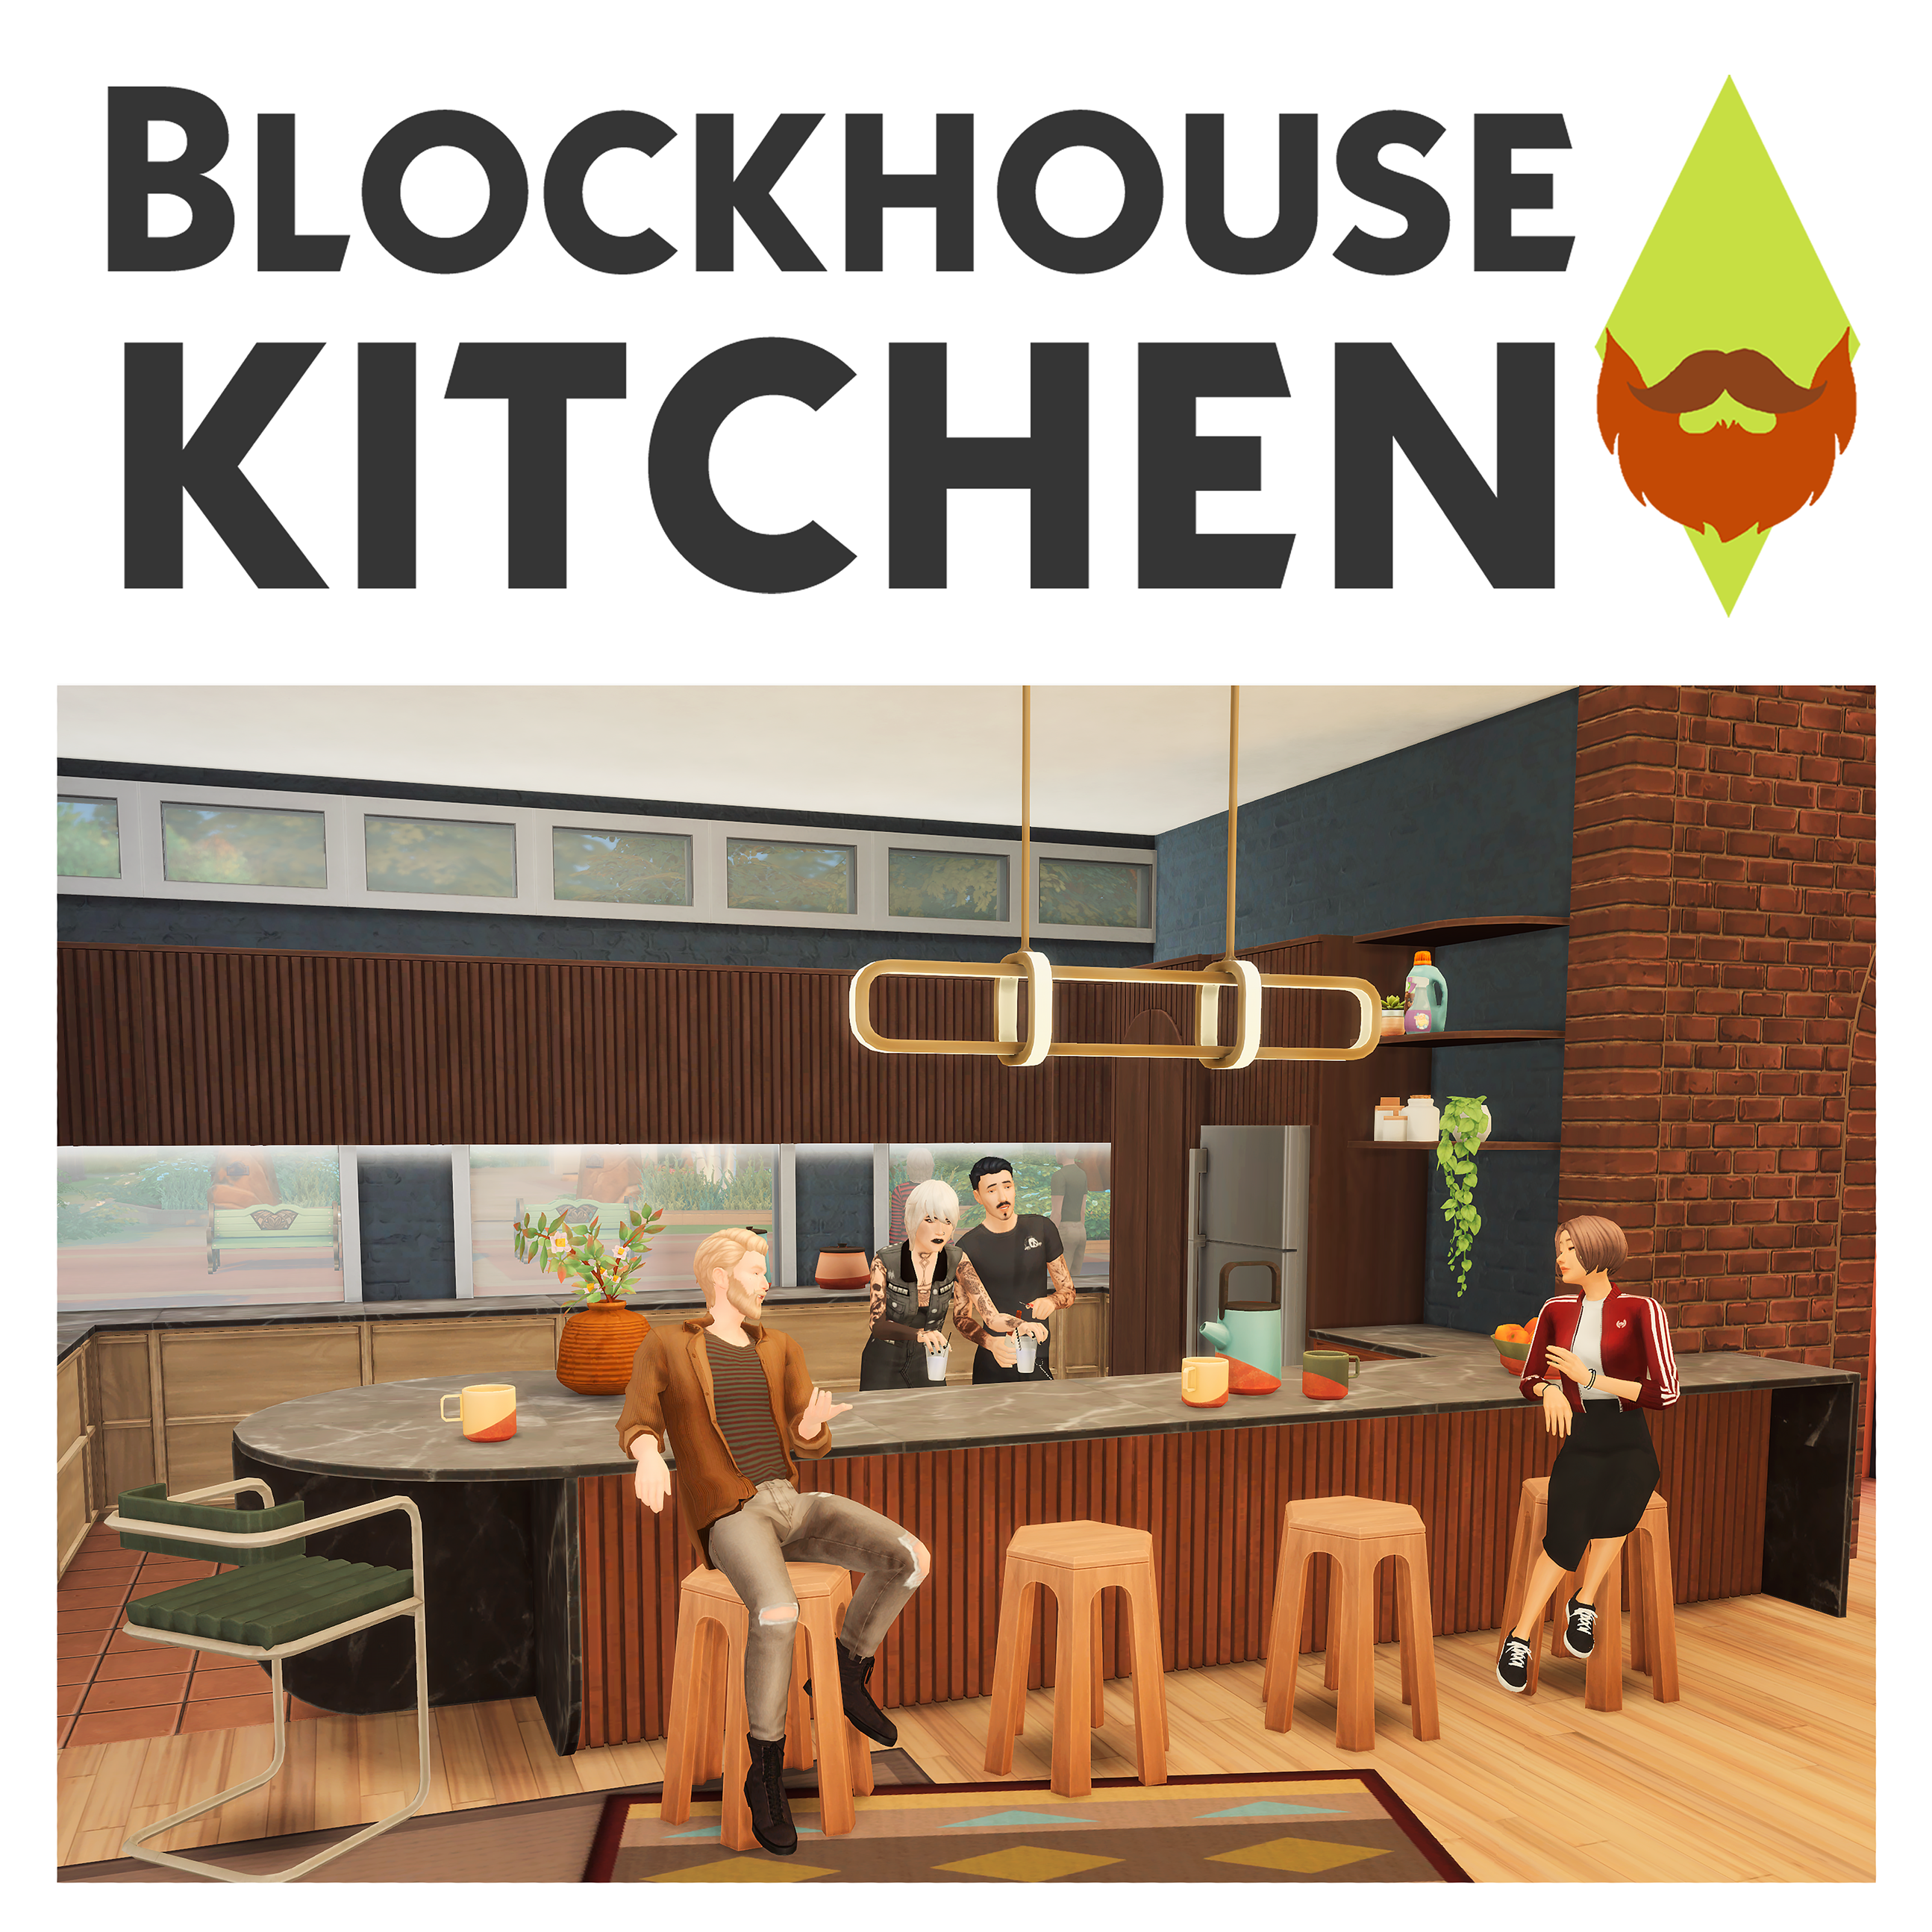 Kichen - The Sims 4 Build / Buy - CurseForge